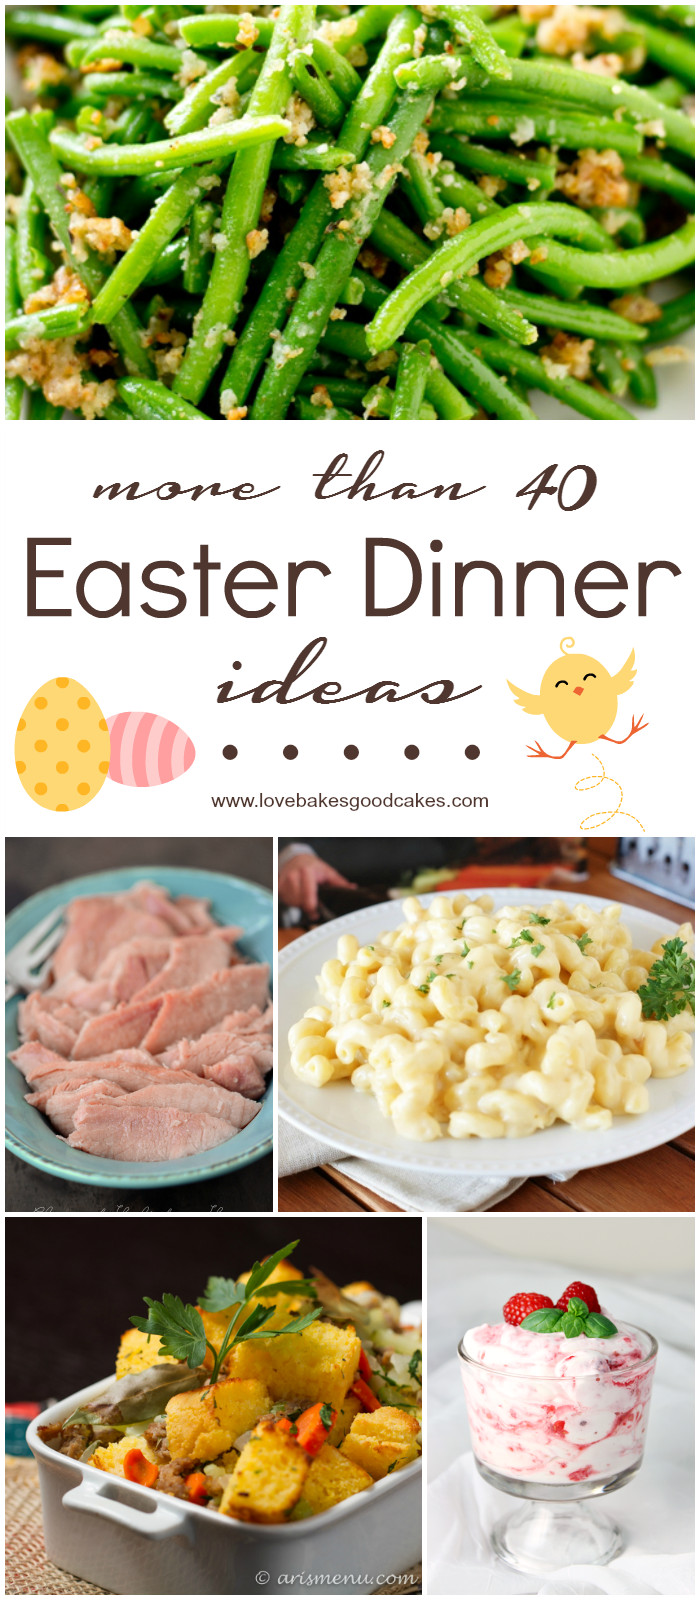 Suggestions For Easter Dinner
 More than 40 Easter Dinner Ideas